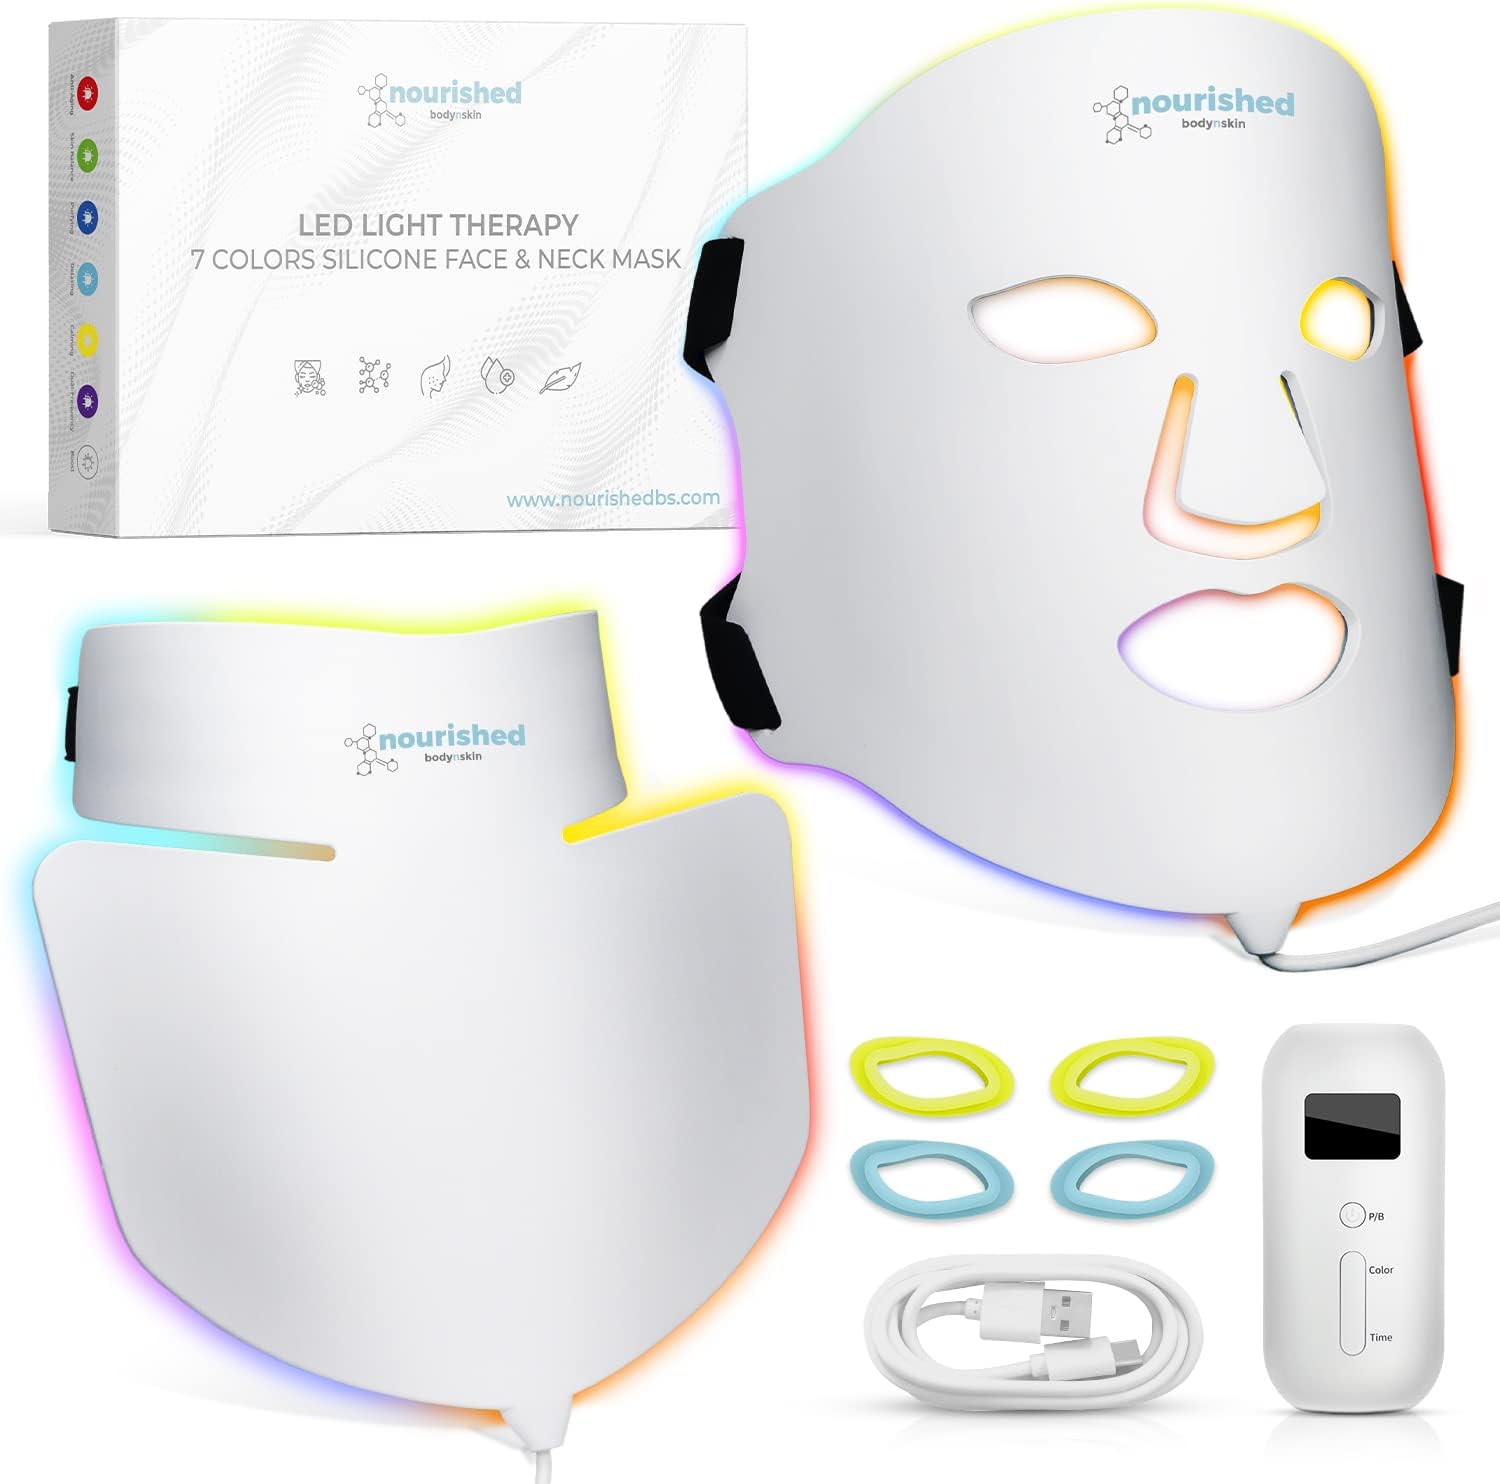 Nourished Bodynskin LED Light Therapy Face & Neck Mask Review